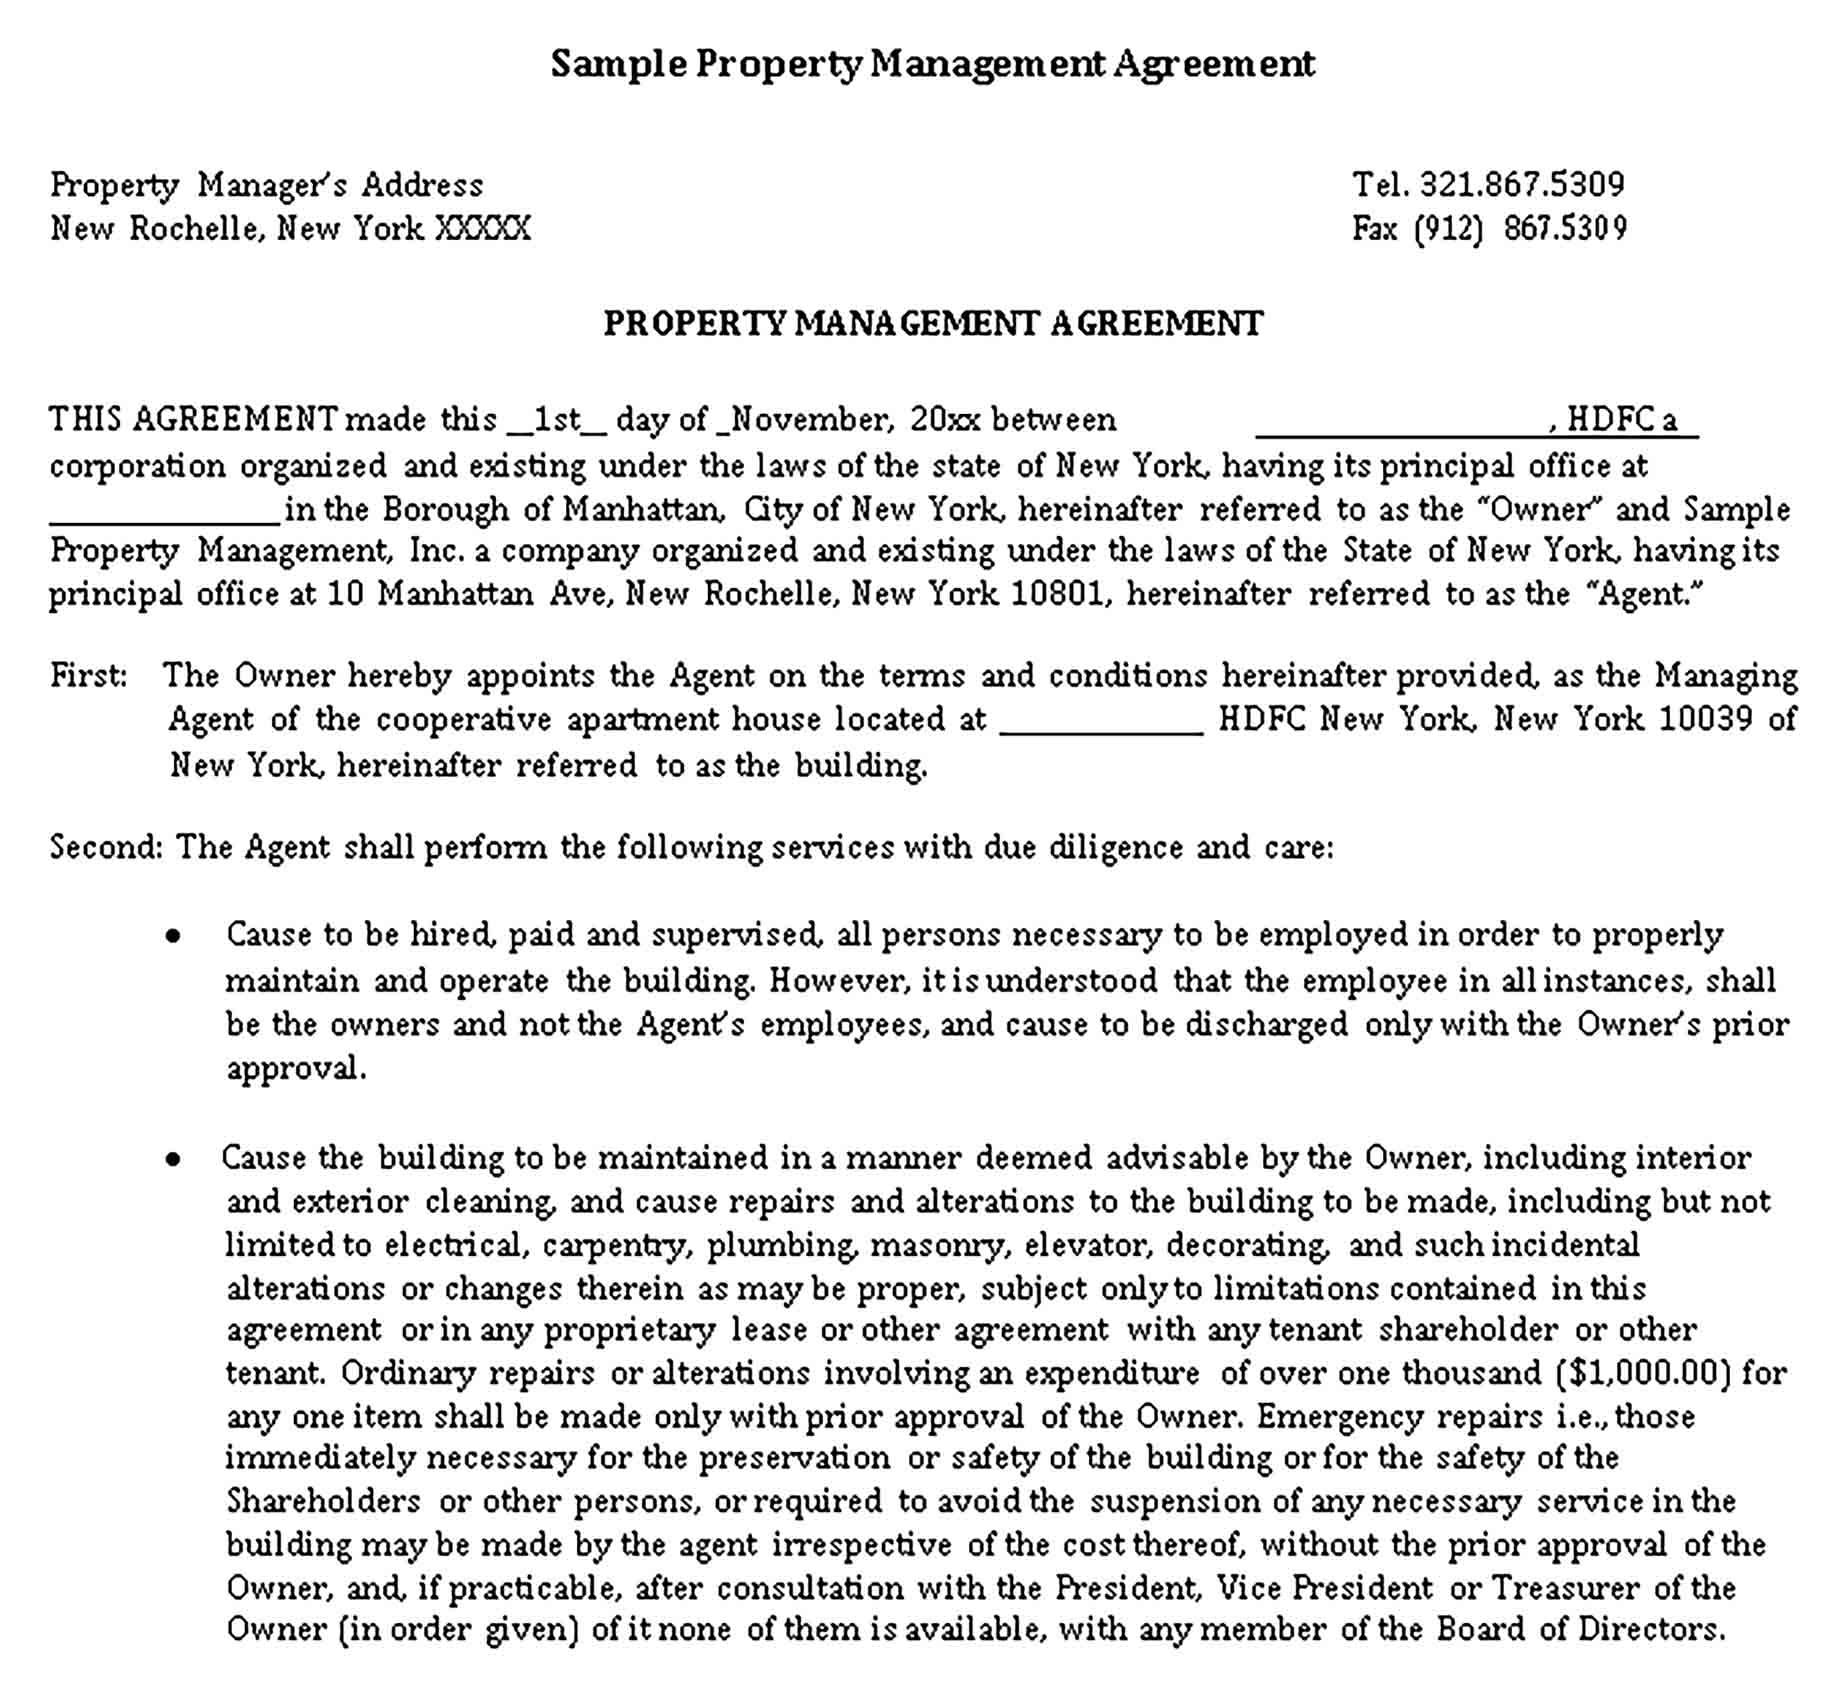 Templates mgt agreement Sample